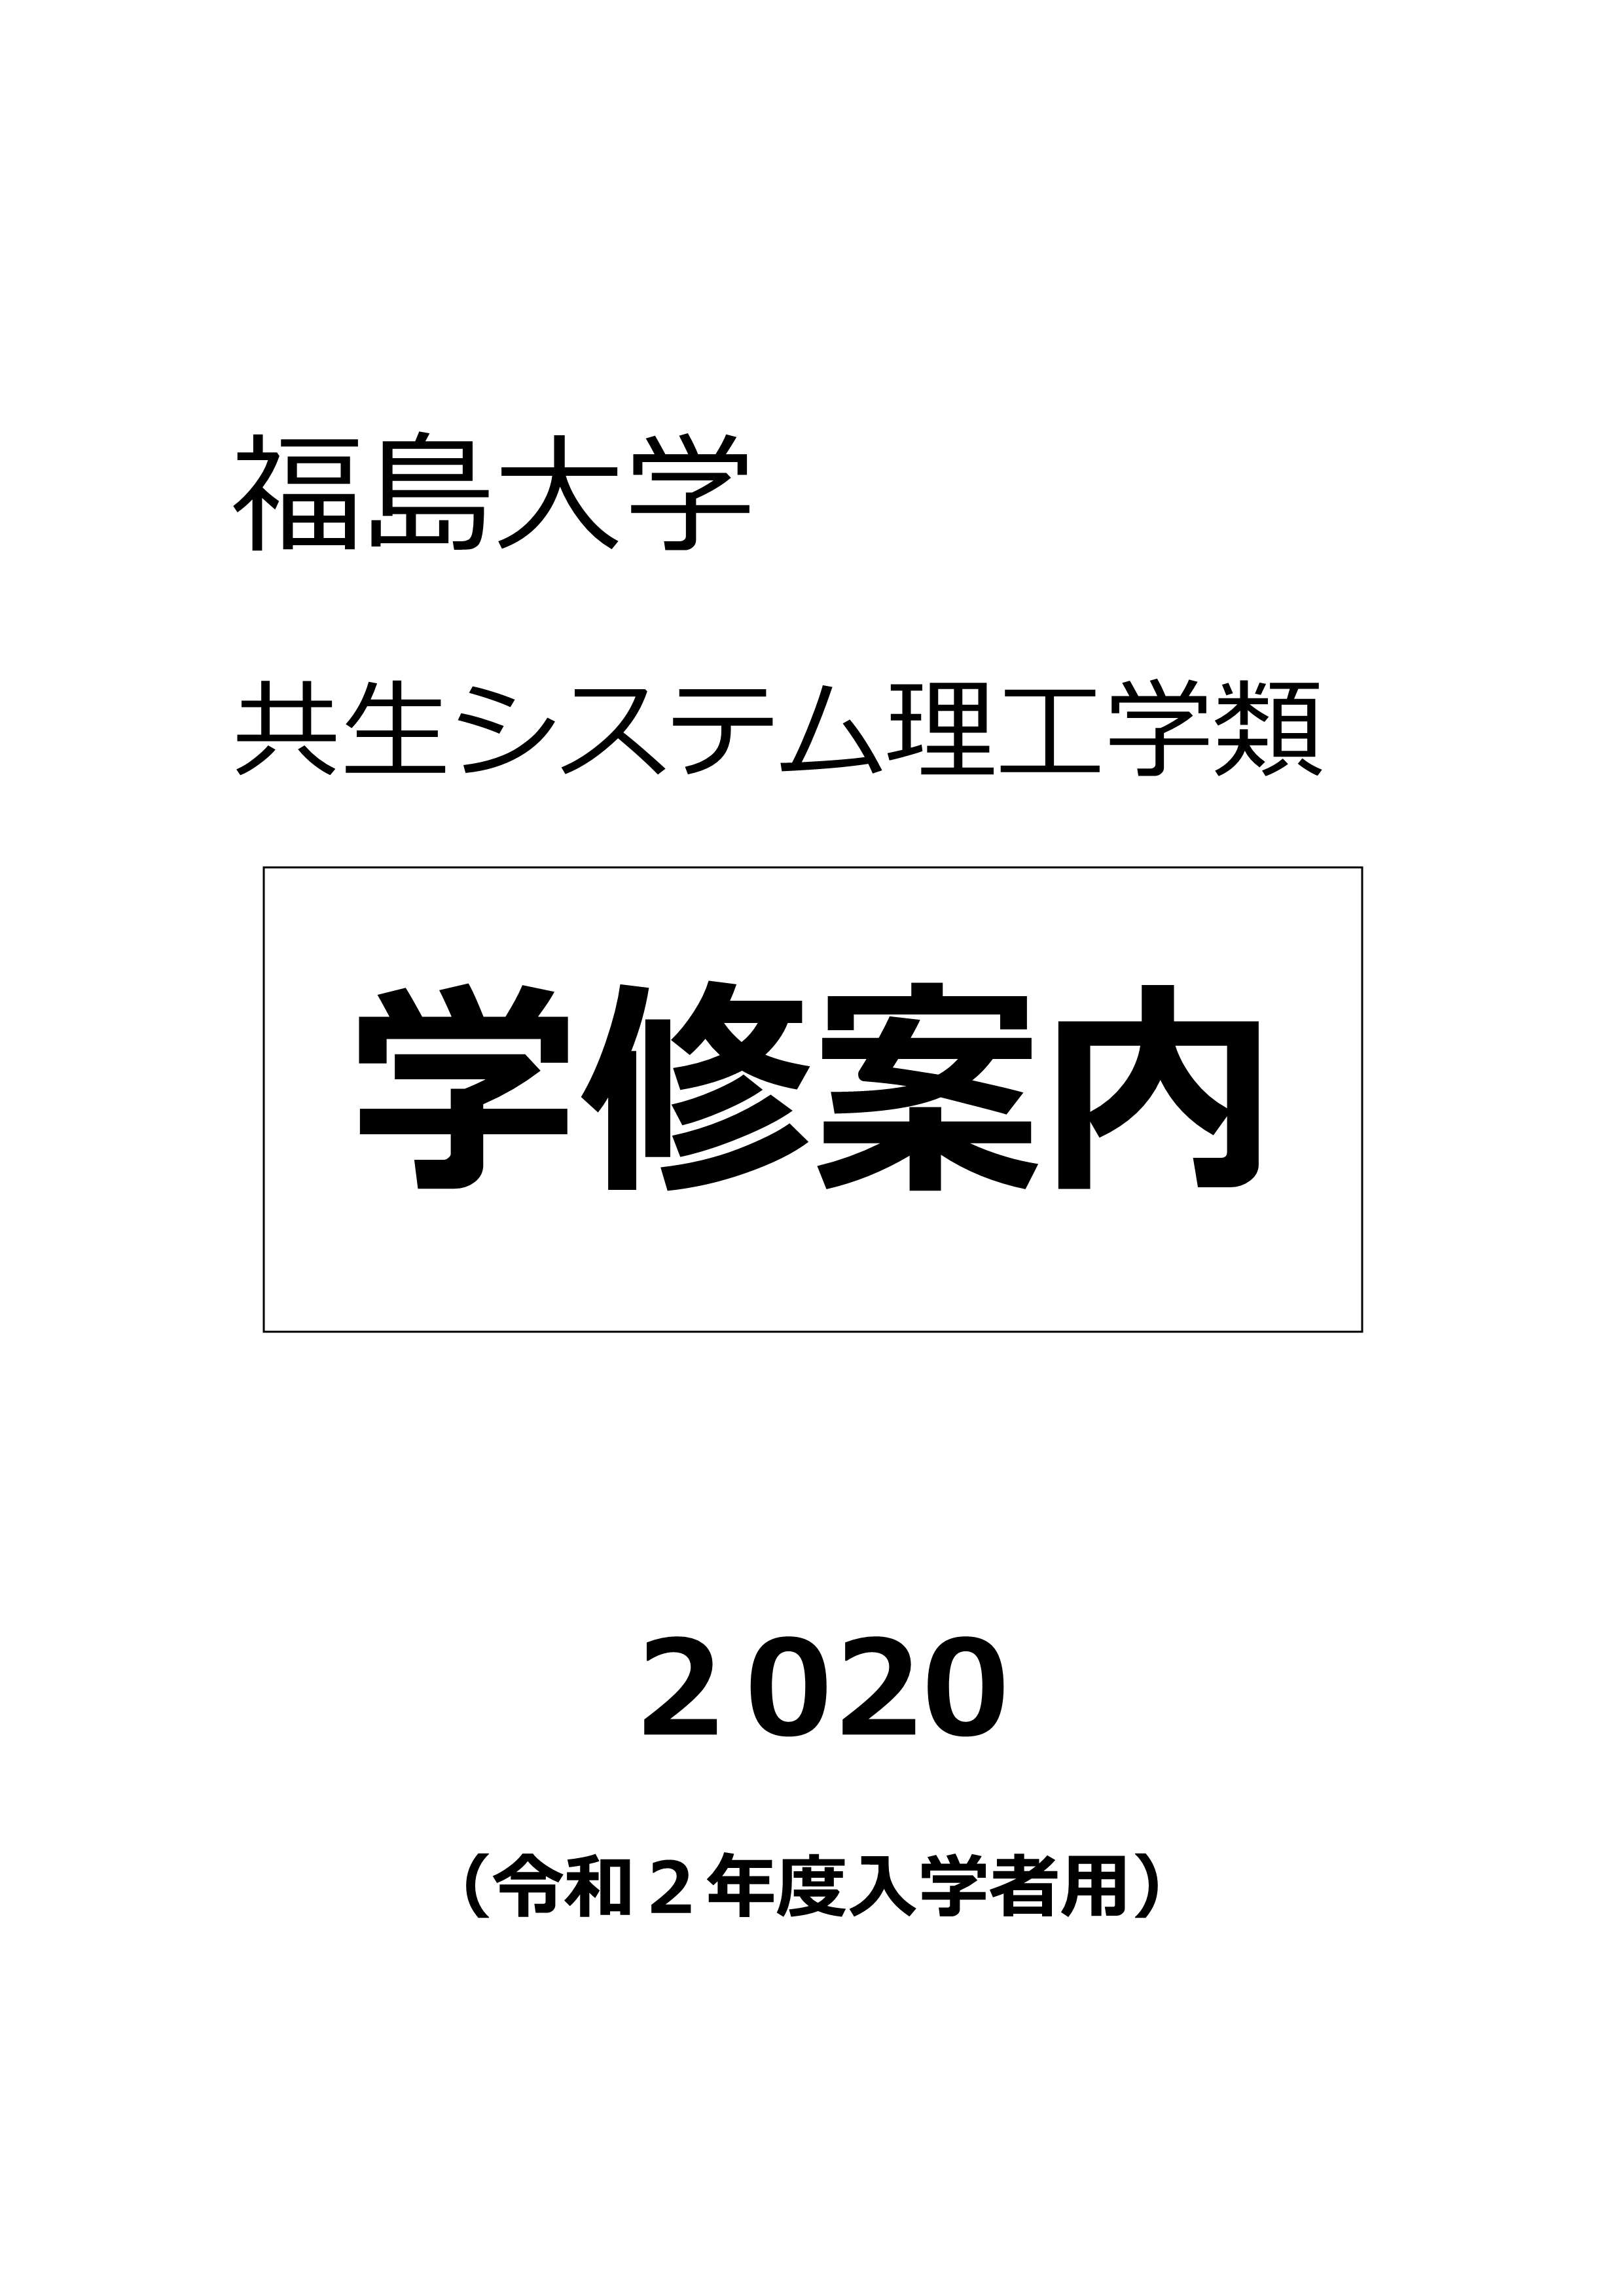 http://kyoumu.adb.fukushima-u.ac.jp/guide/2020/common/Files/2020/01/rikou_hyousi.jpg